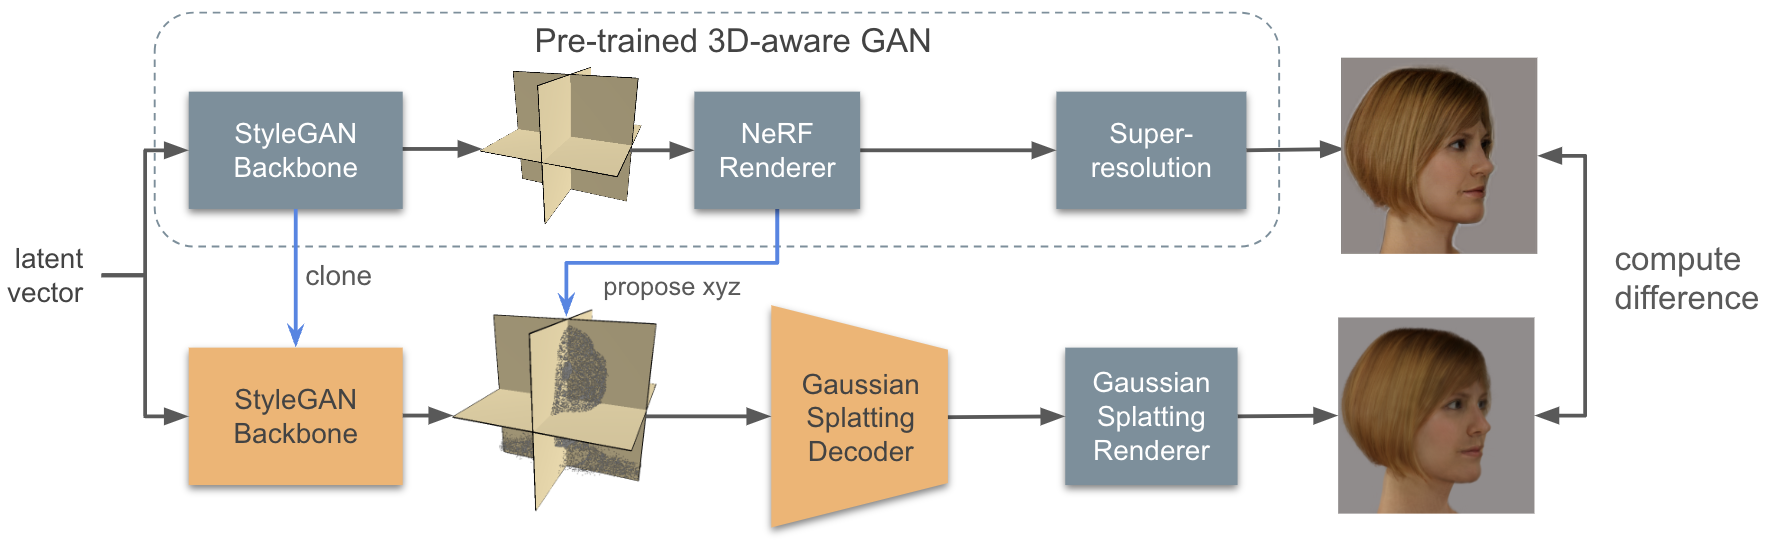 Gaussian Splatting Decoder for 3D-aware Generative Adversarial Networks